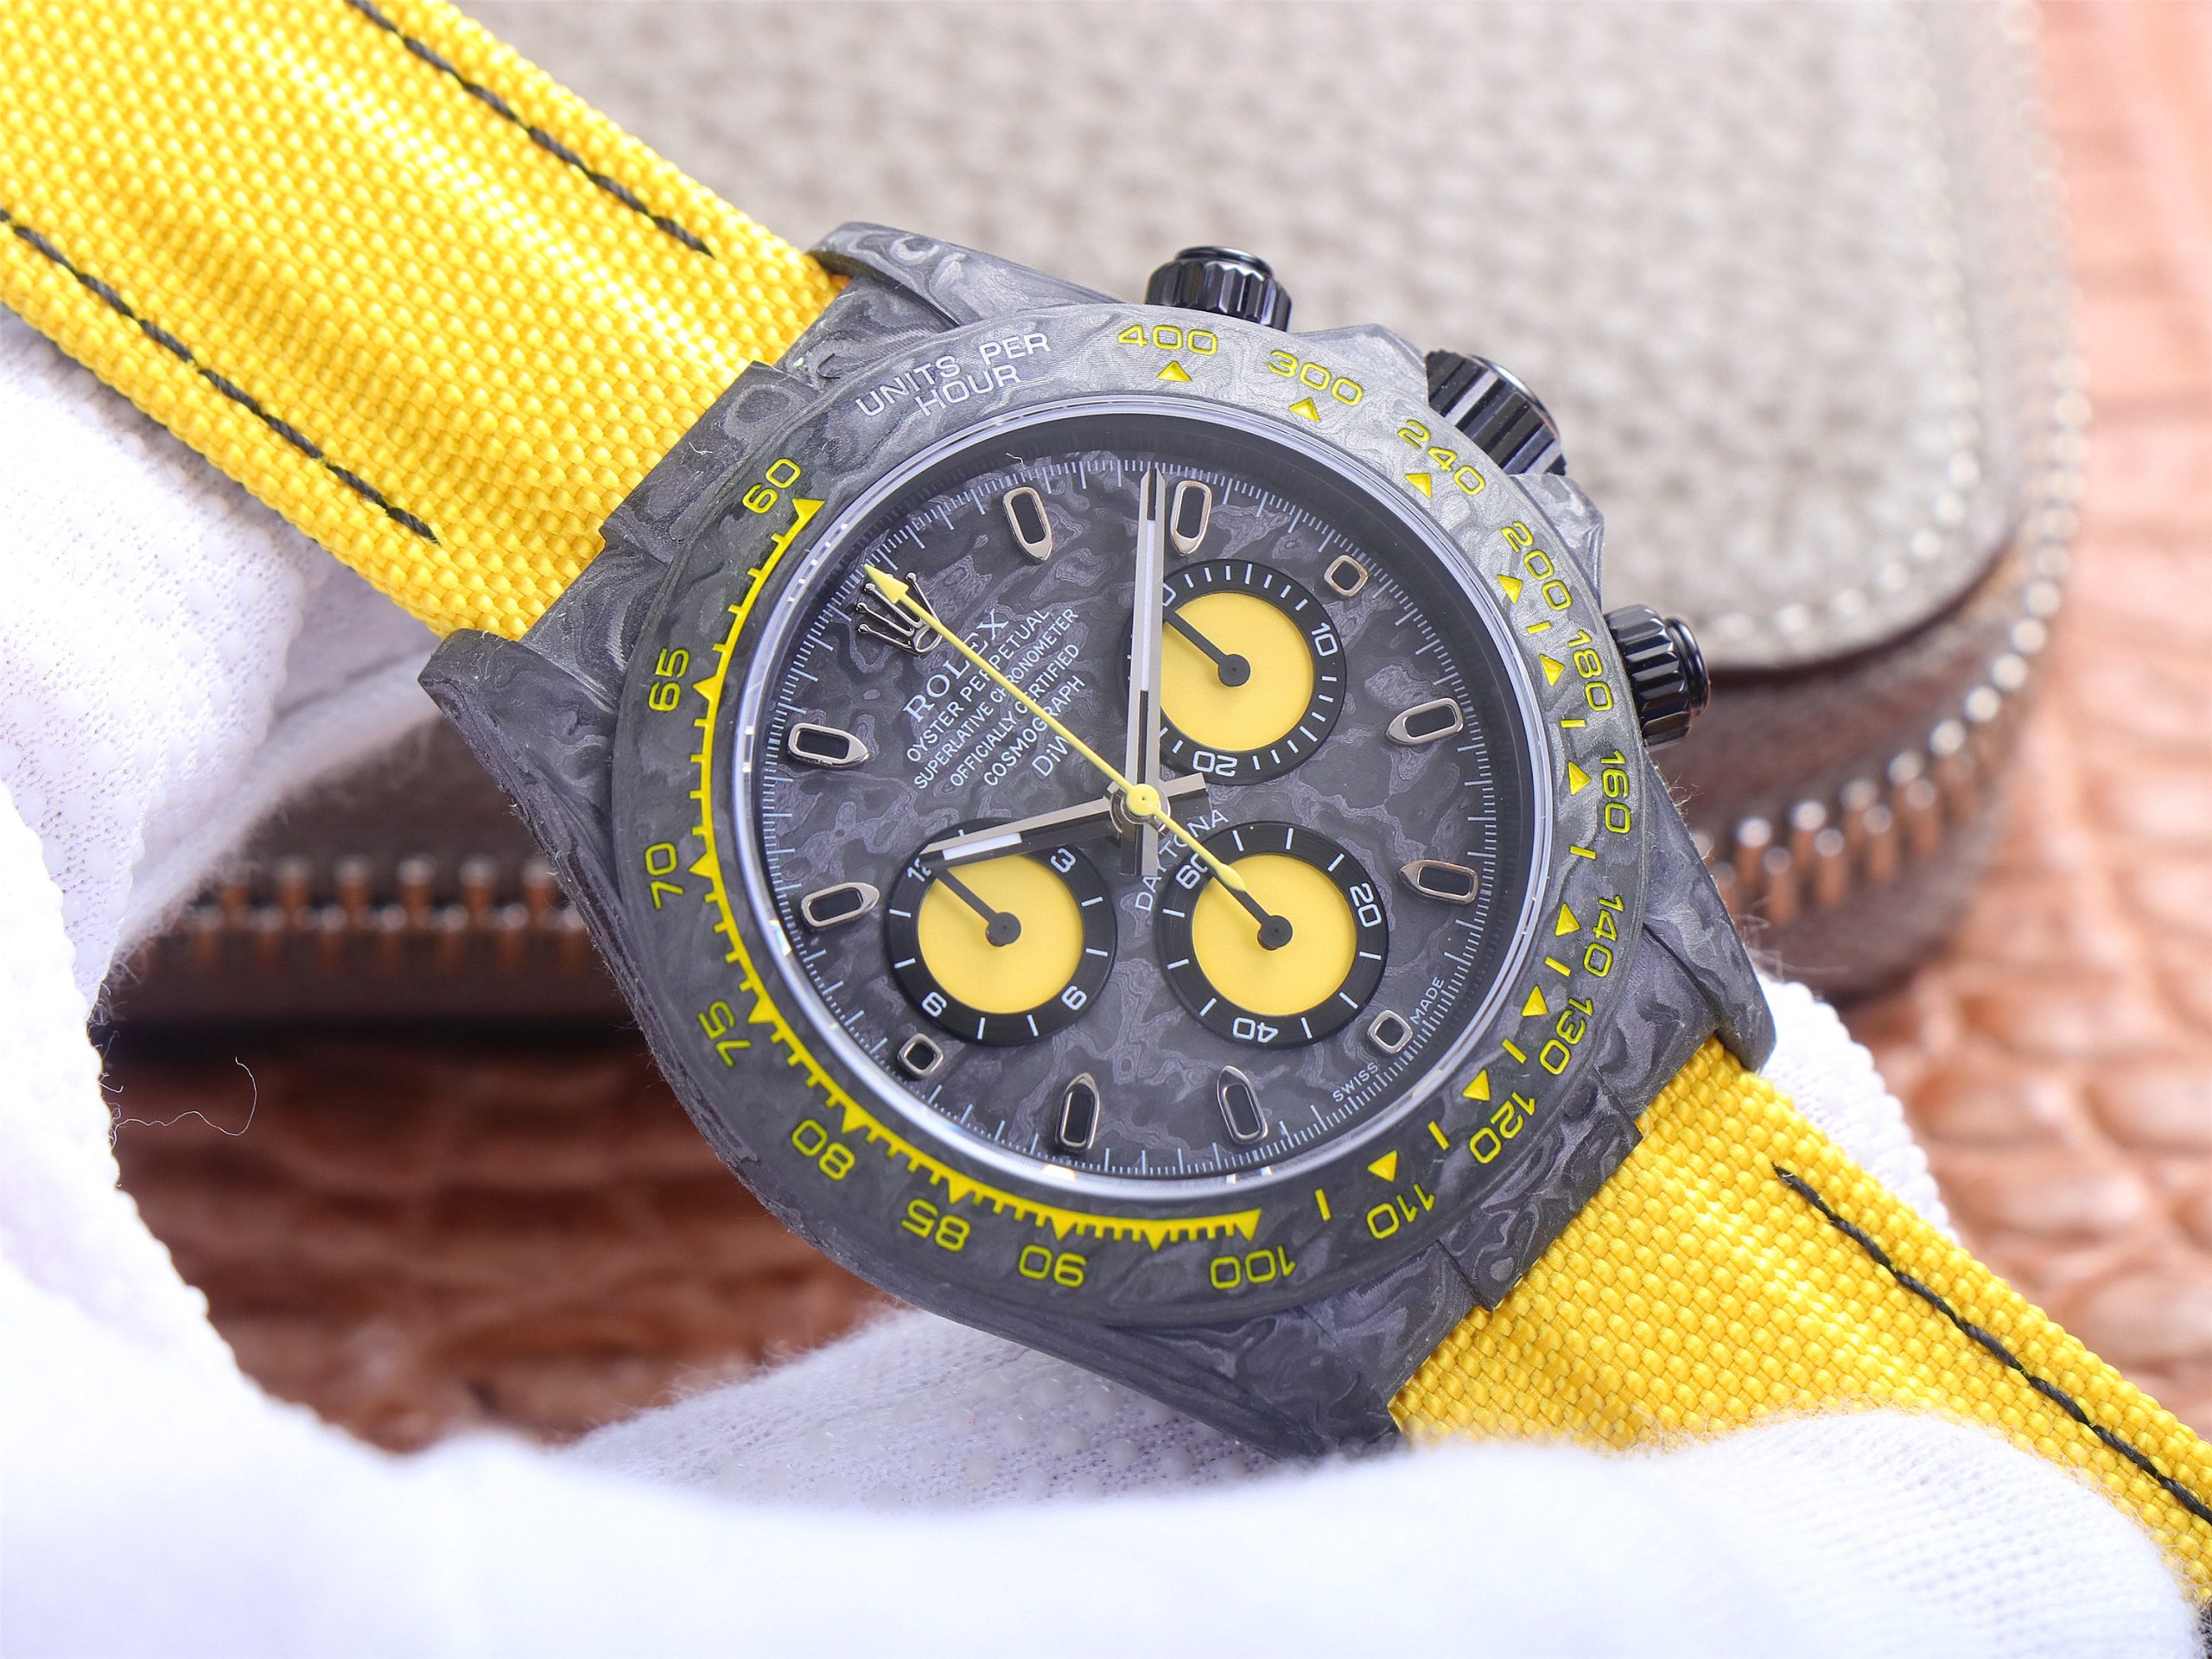 2023021204514630 scaled - 高仿彩色迪通拿手錶價格 JH廠手錶勞力士迪通拿碳纖維定制版 復刻錶￥4580